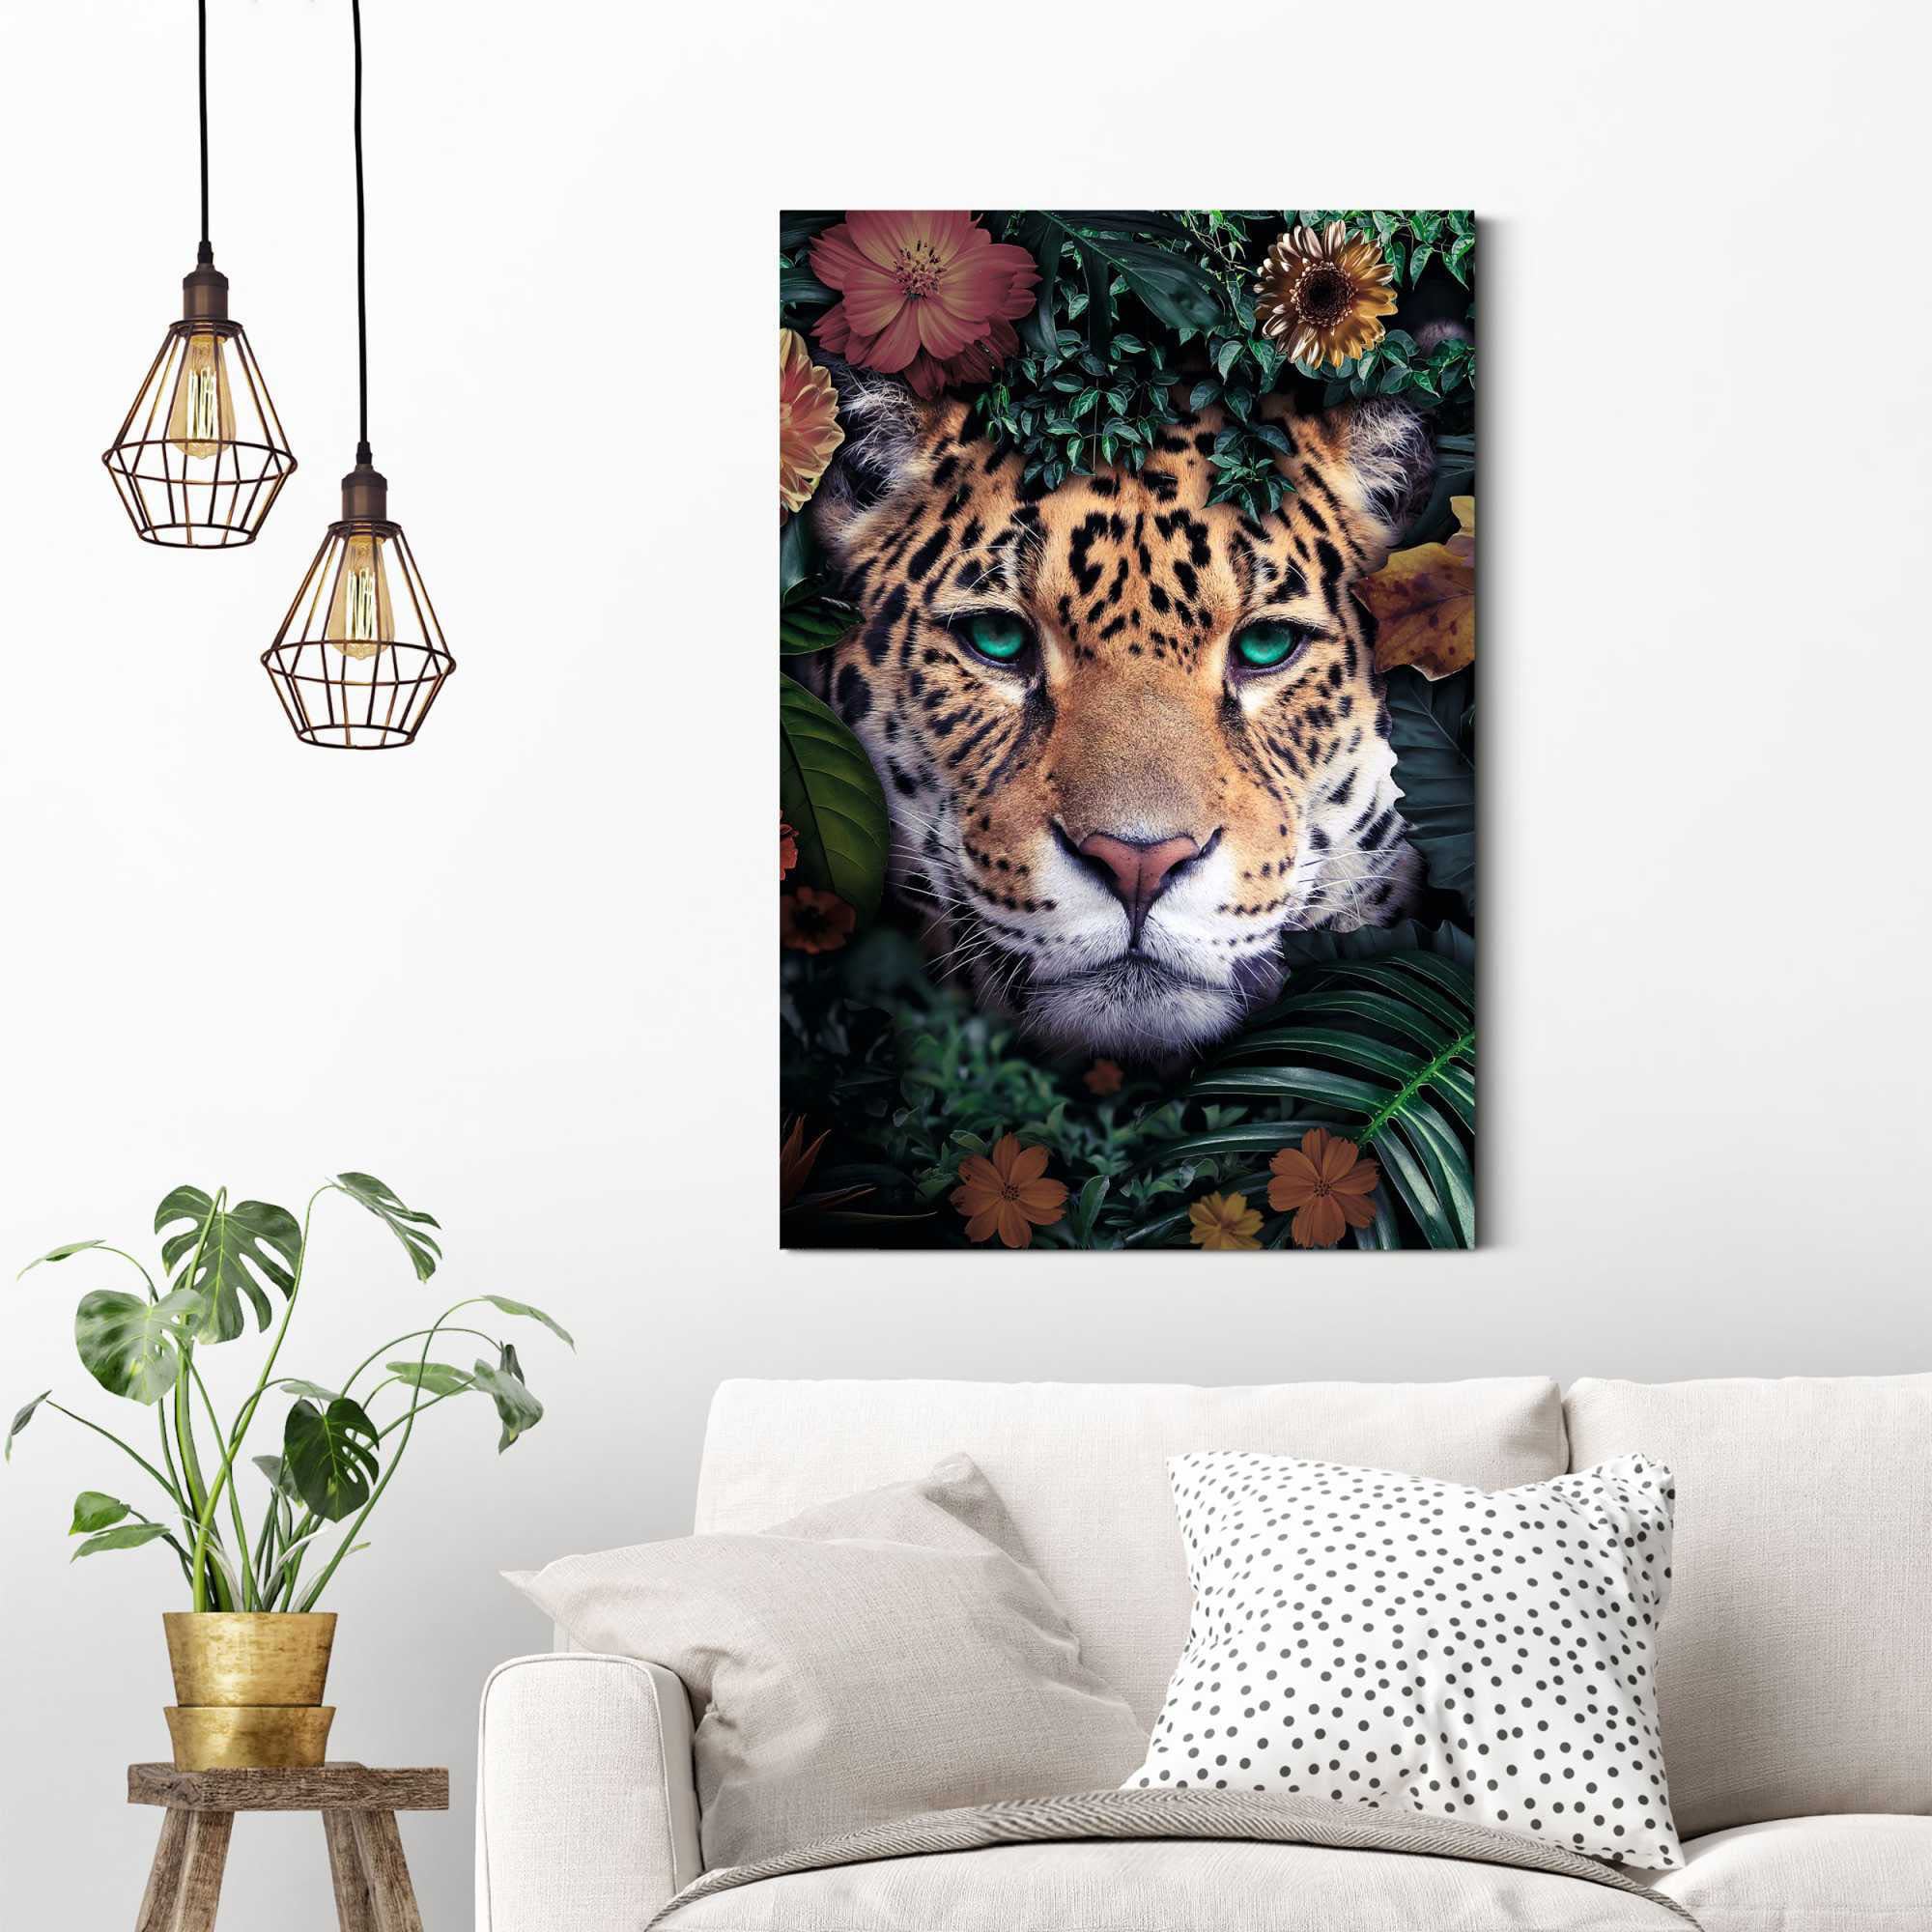 Leopard Farbenfroh«, versandkostenfrei Wandbild - Jungle auf - Reinders! Blumenkranz (1 »Wandbild St.) Leopard,